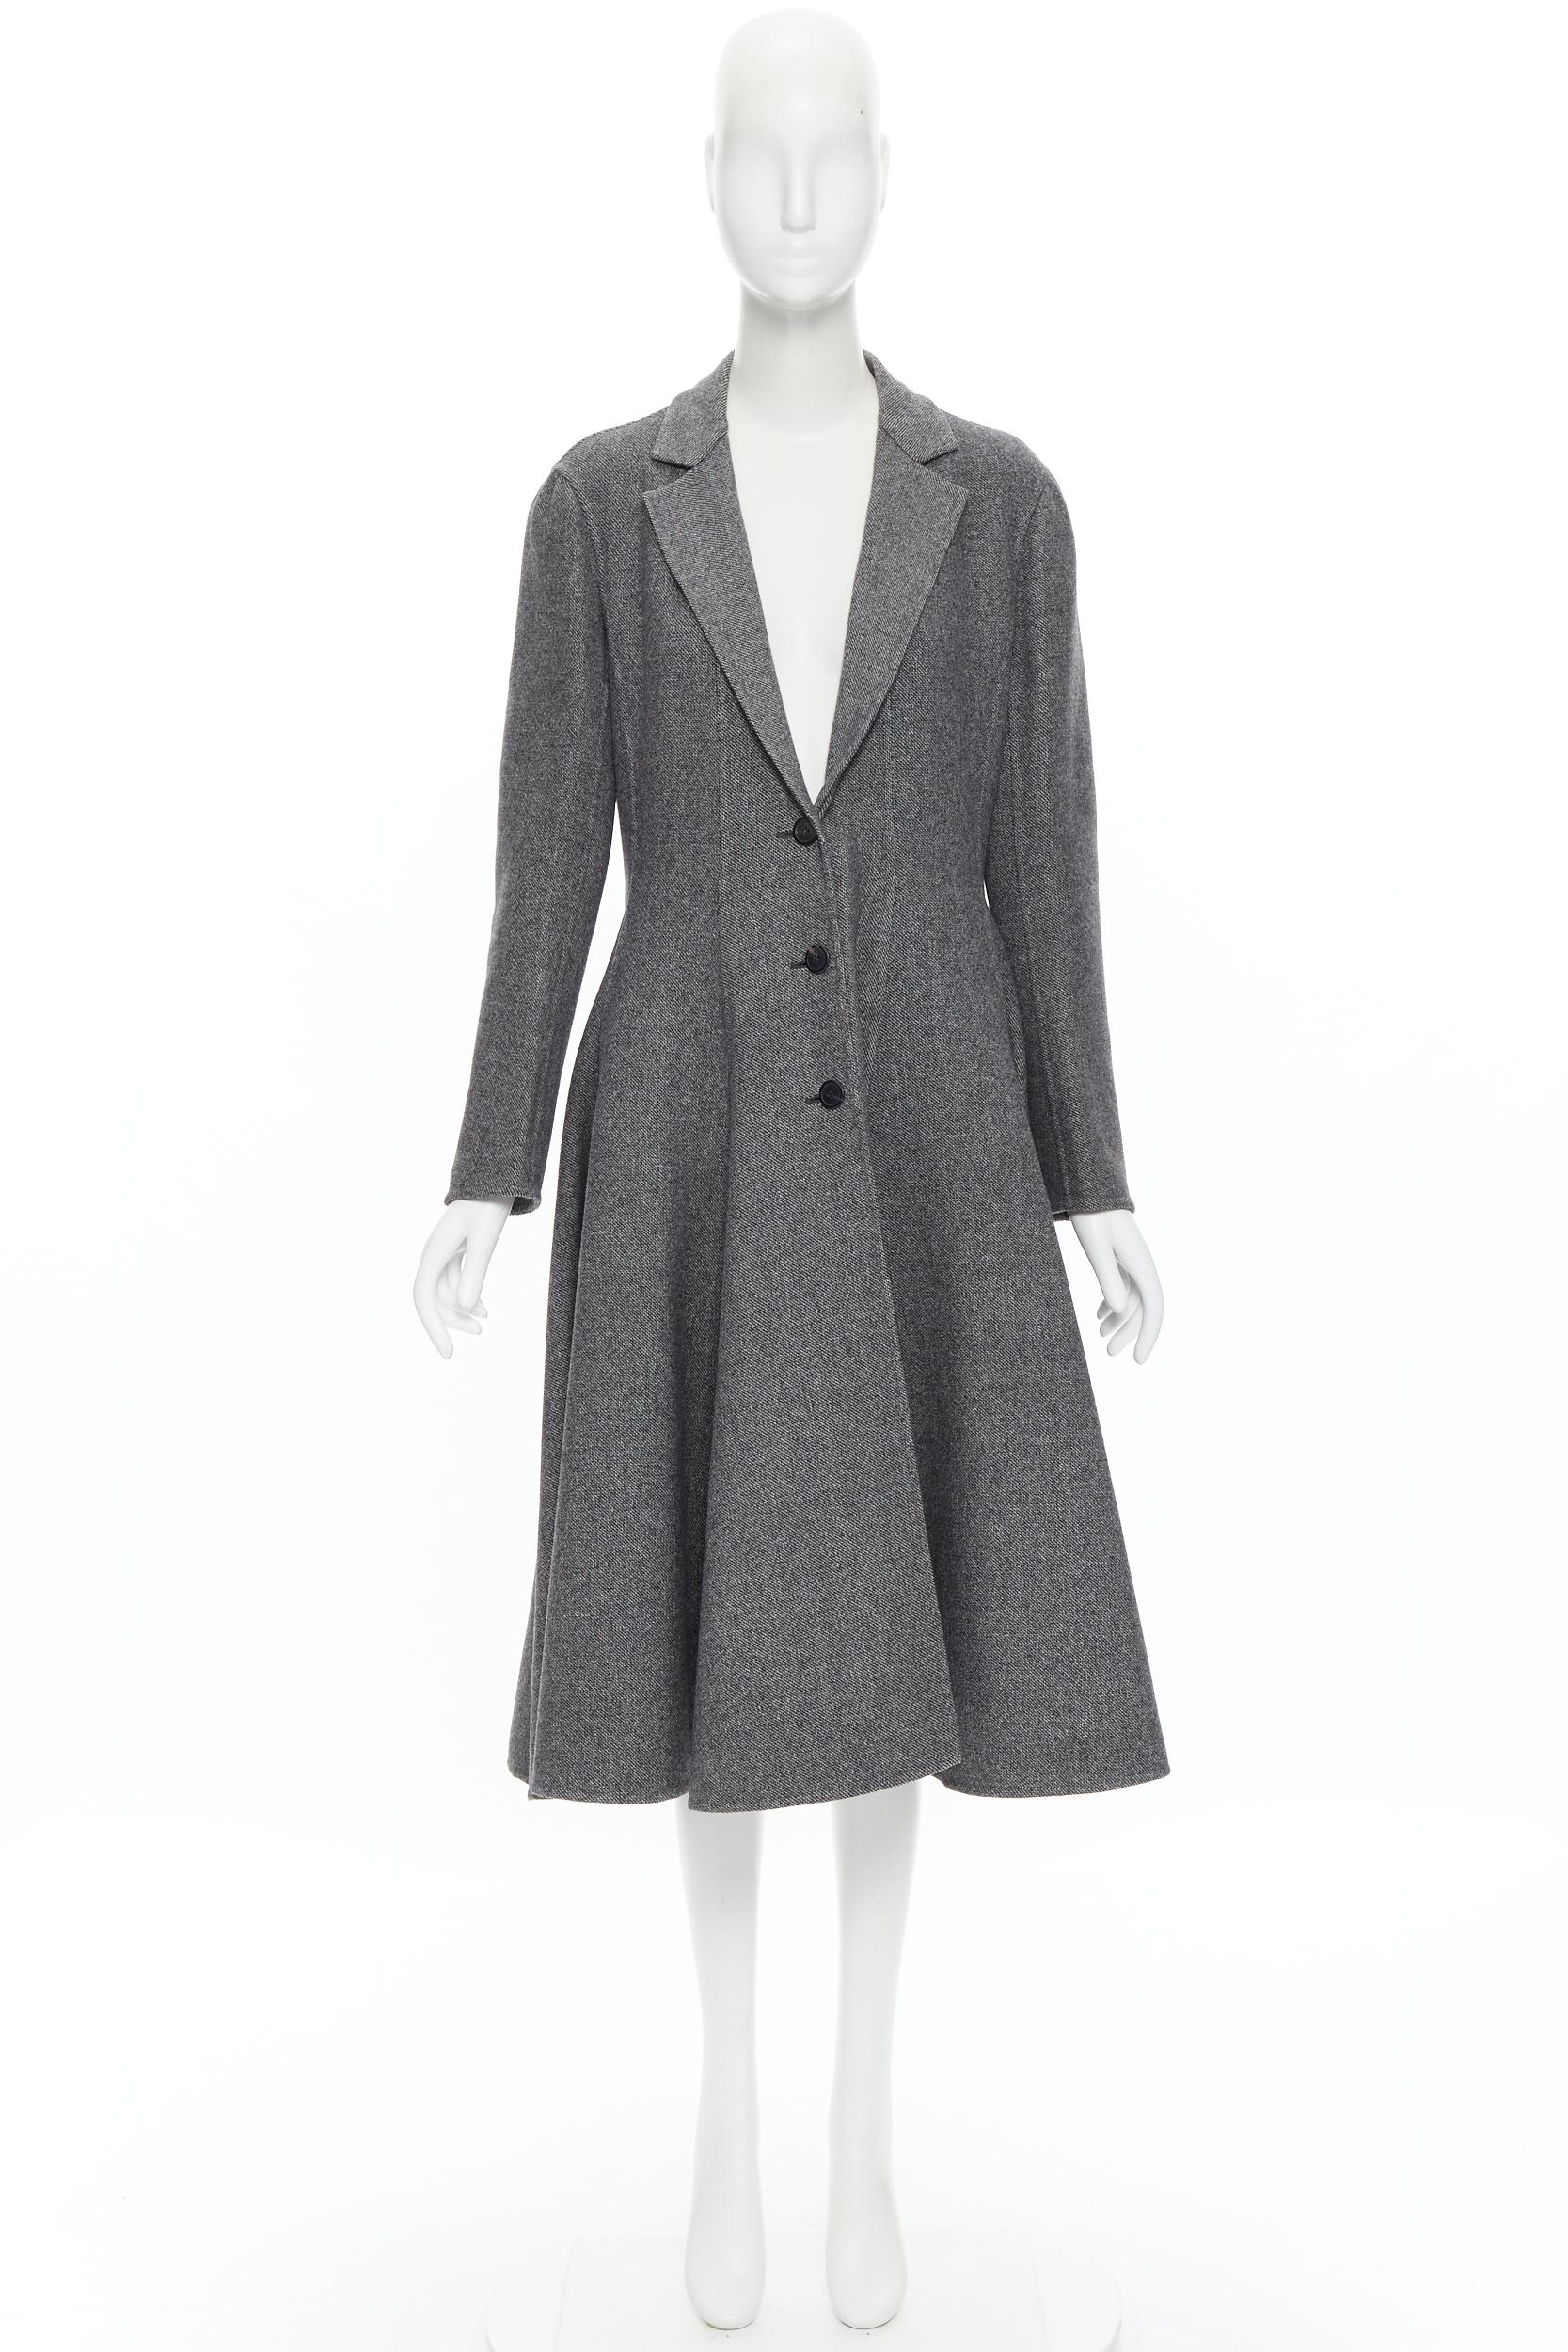 CHRISTIAN DIOR grey wool classic fit flared blazer swing coat dress FR42 L 2